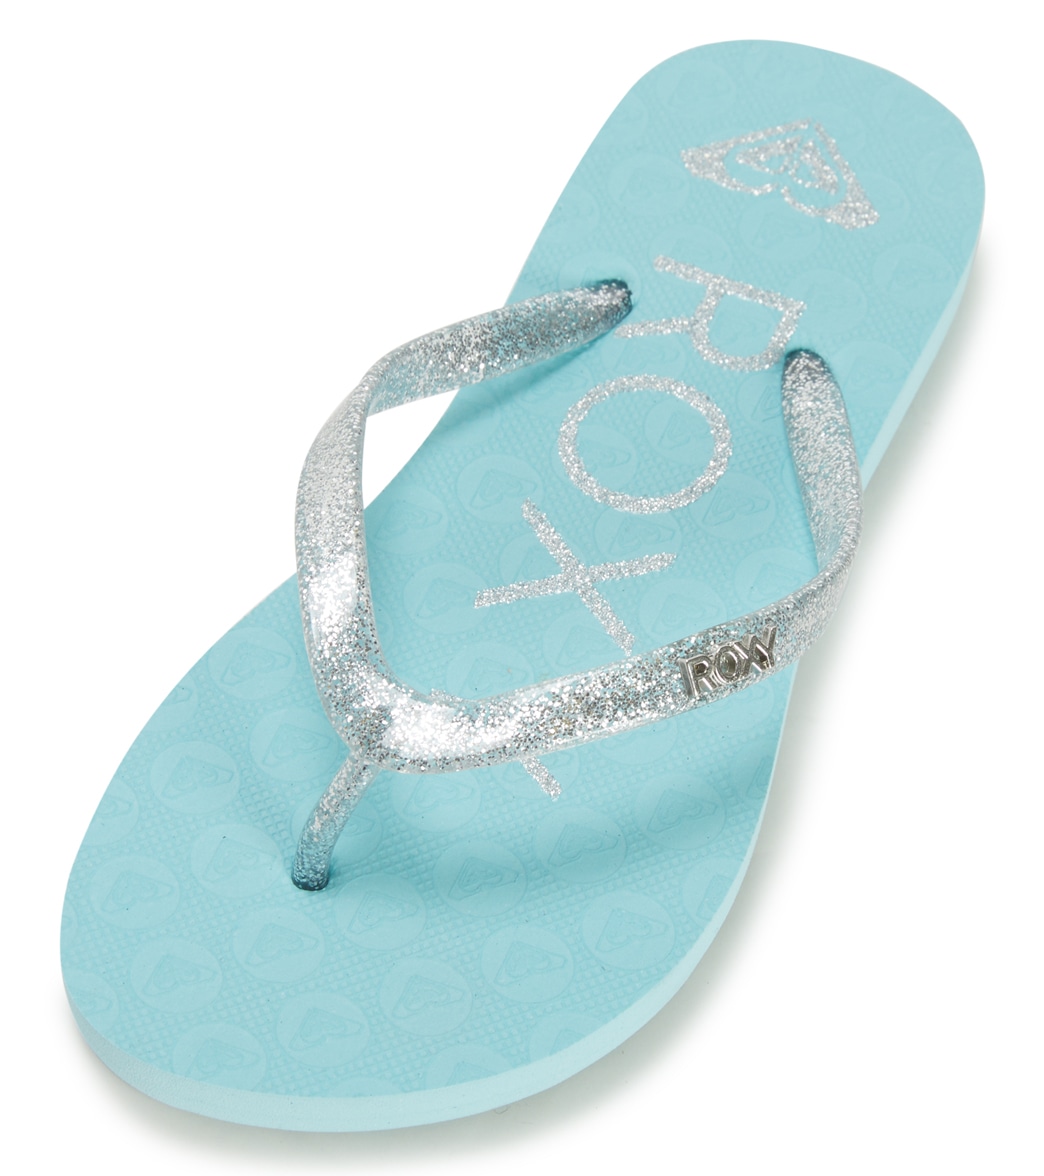 Roxy Girls' Viva Sparkle Flip Flops - Mint 1 100% Rubber - Swimoutlet.com